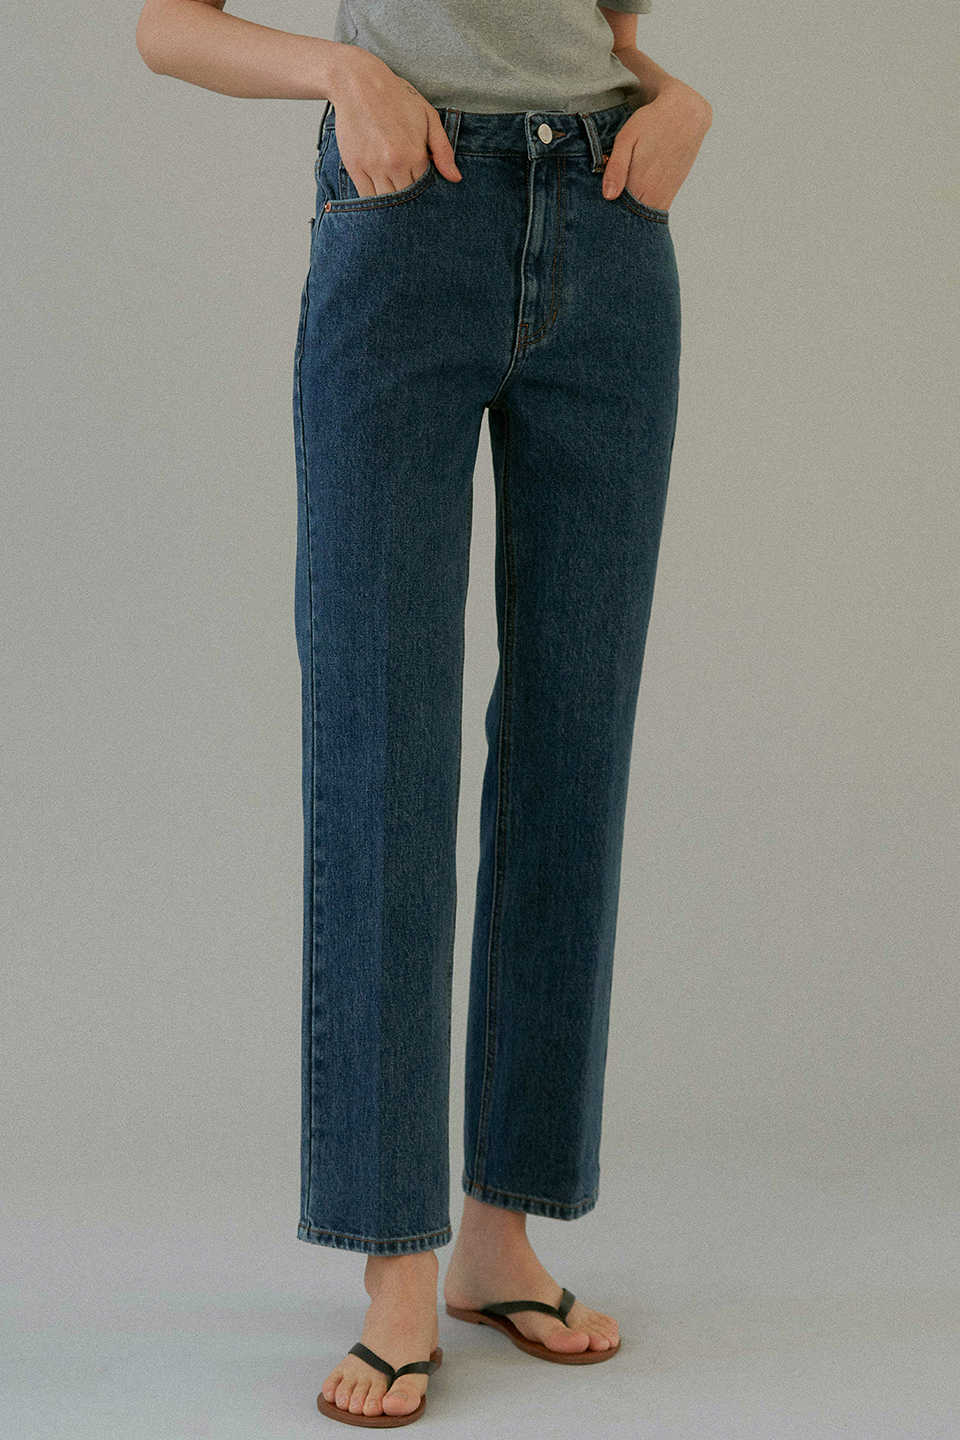 classic cropped jeans (classic blue)/S, L사이즈 4/25 예약배송